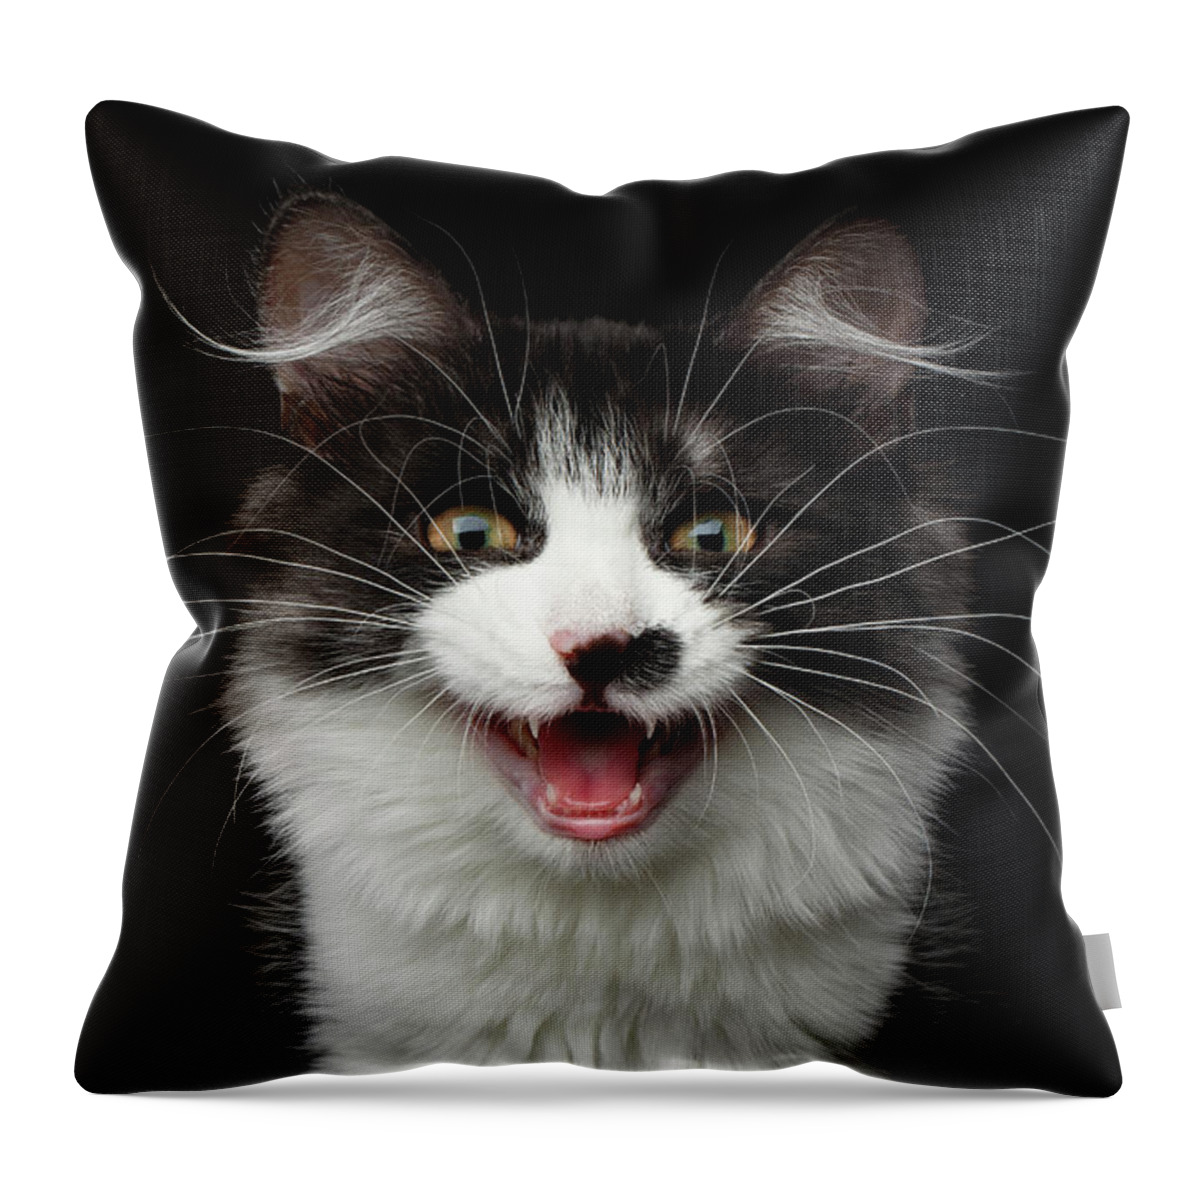 Cat Throw Pillow featuring the photograph Meow of Siberian Kitten by Sergey Taran